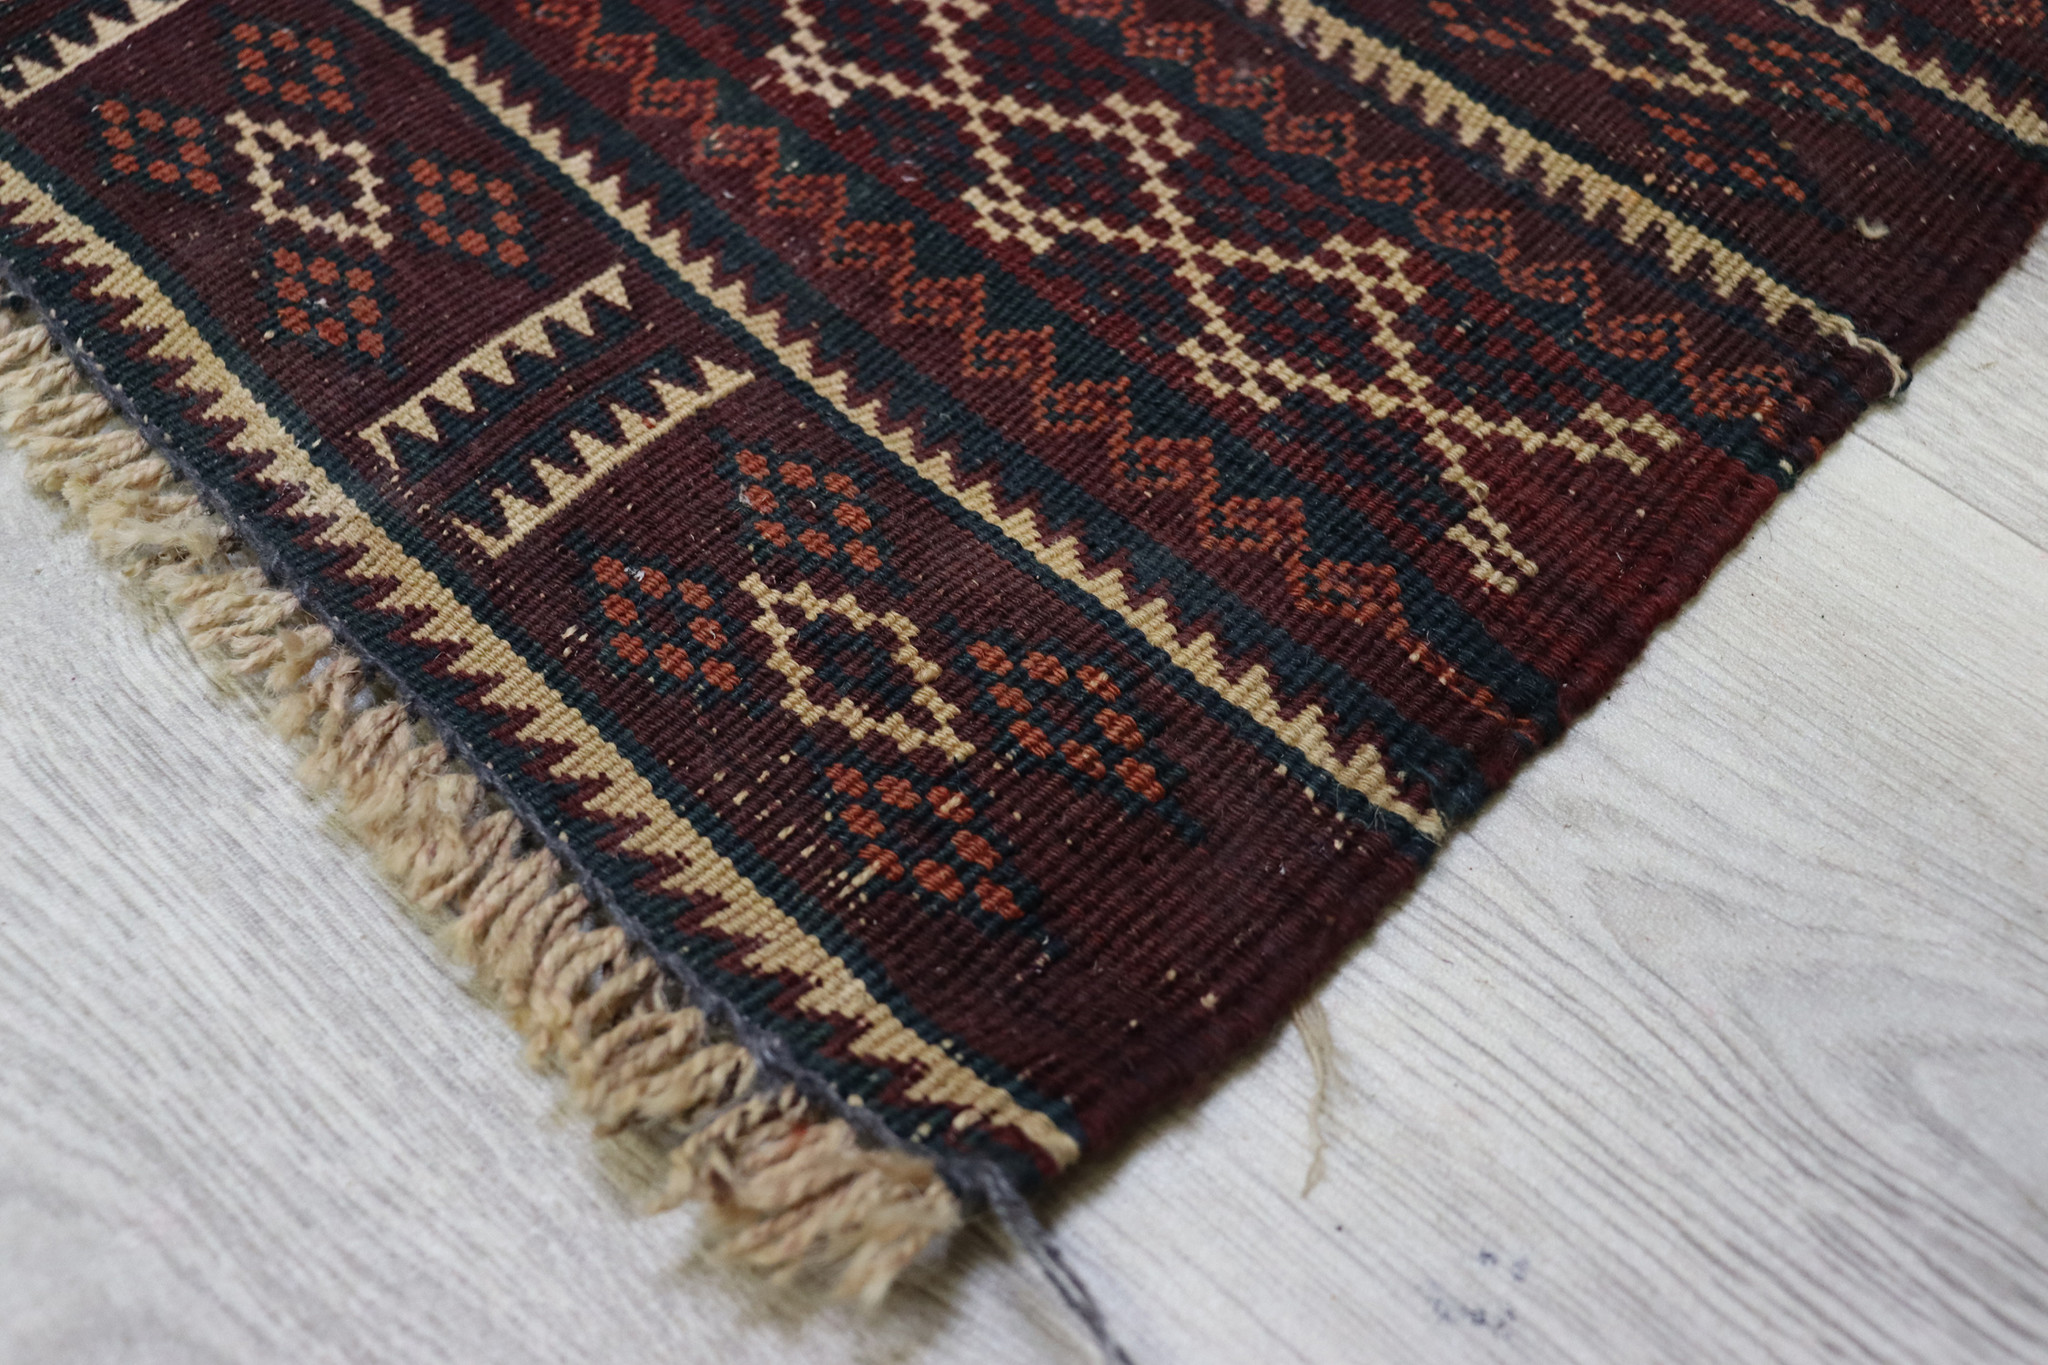 88x50 antique tribal Nomadic Baluch nomads belotsch sumakh Balouch Vintage Kilim rug from Afghanistan No-22/PK-KL/2